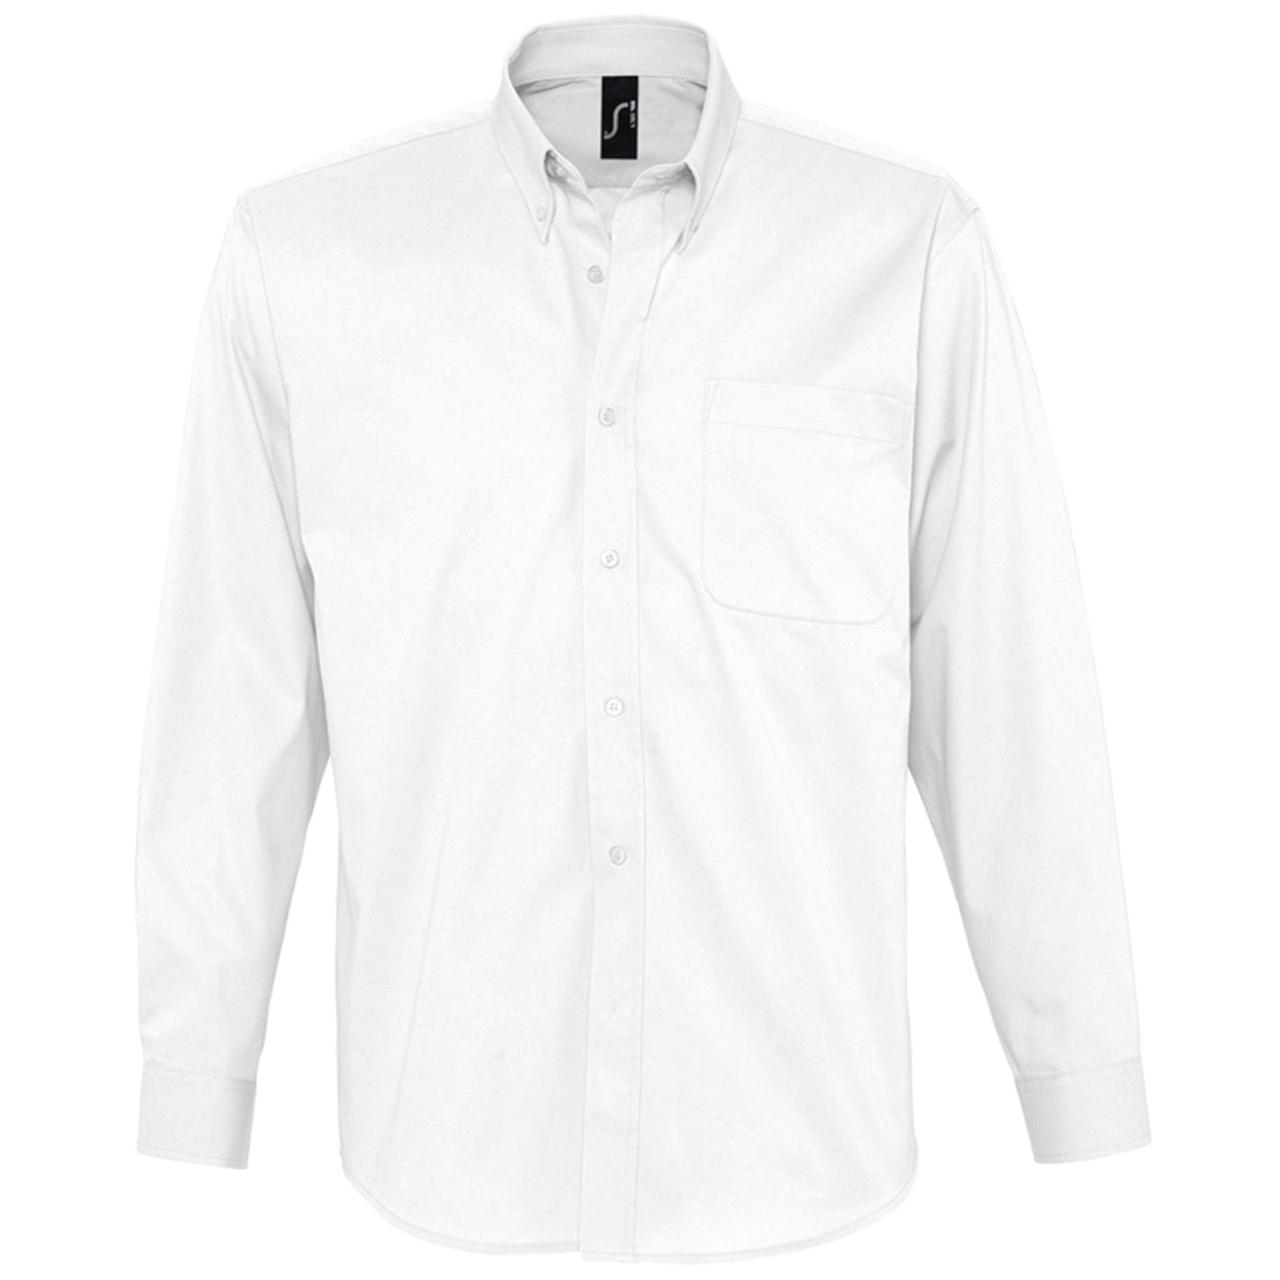 Рубашка мужская с длинным рукавом Bel Air, белая (артикул 2506.60)